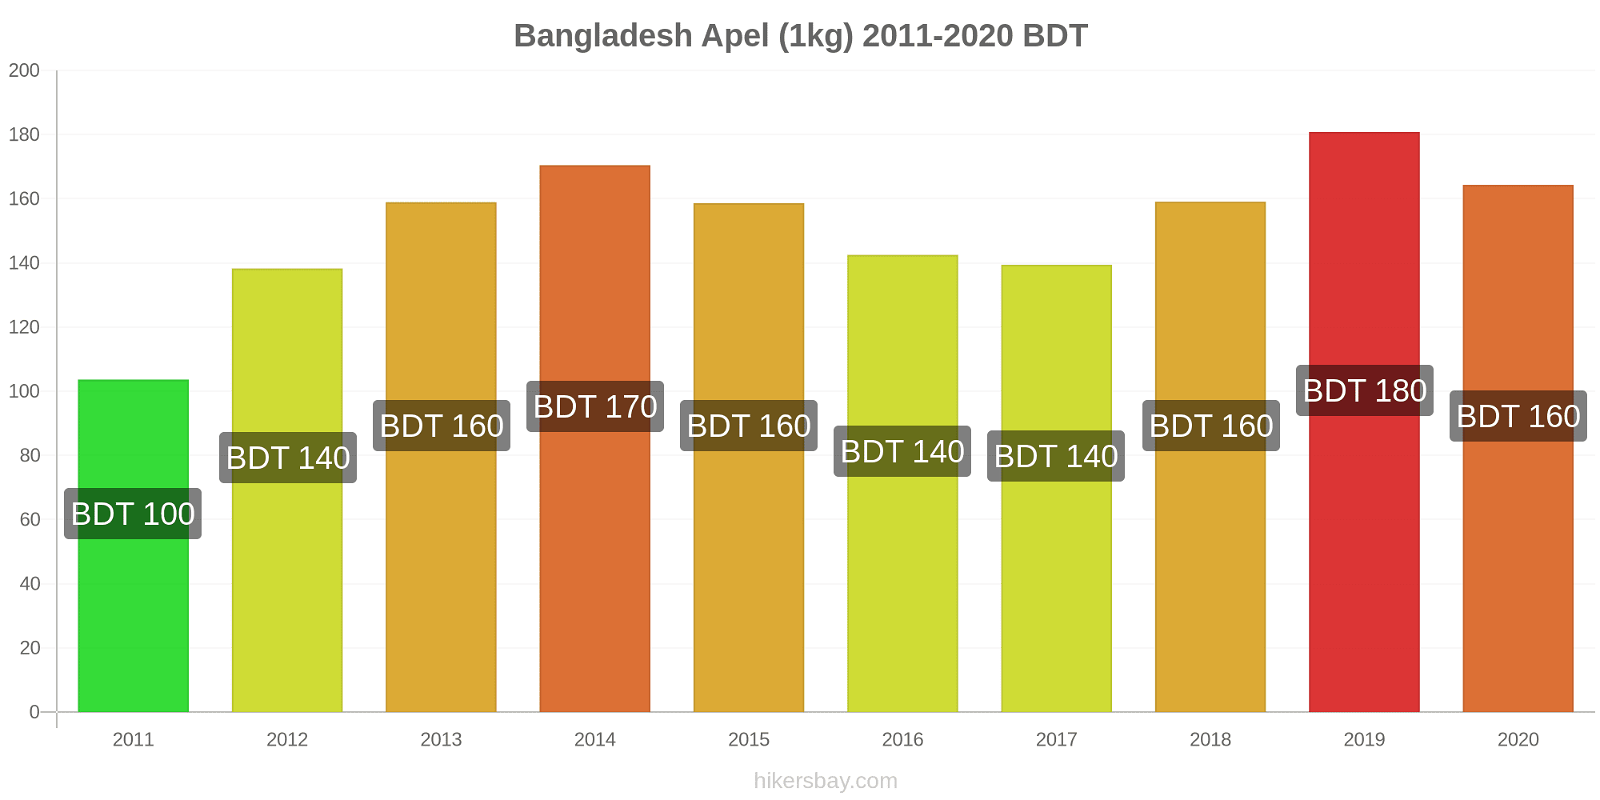 Bangladesh perubahan harga Apel (1kg) hikersbay.com